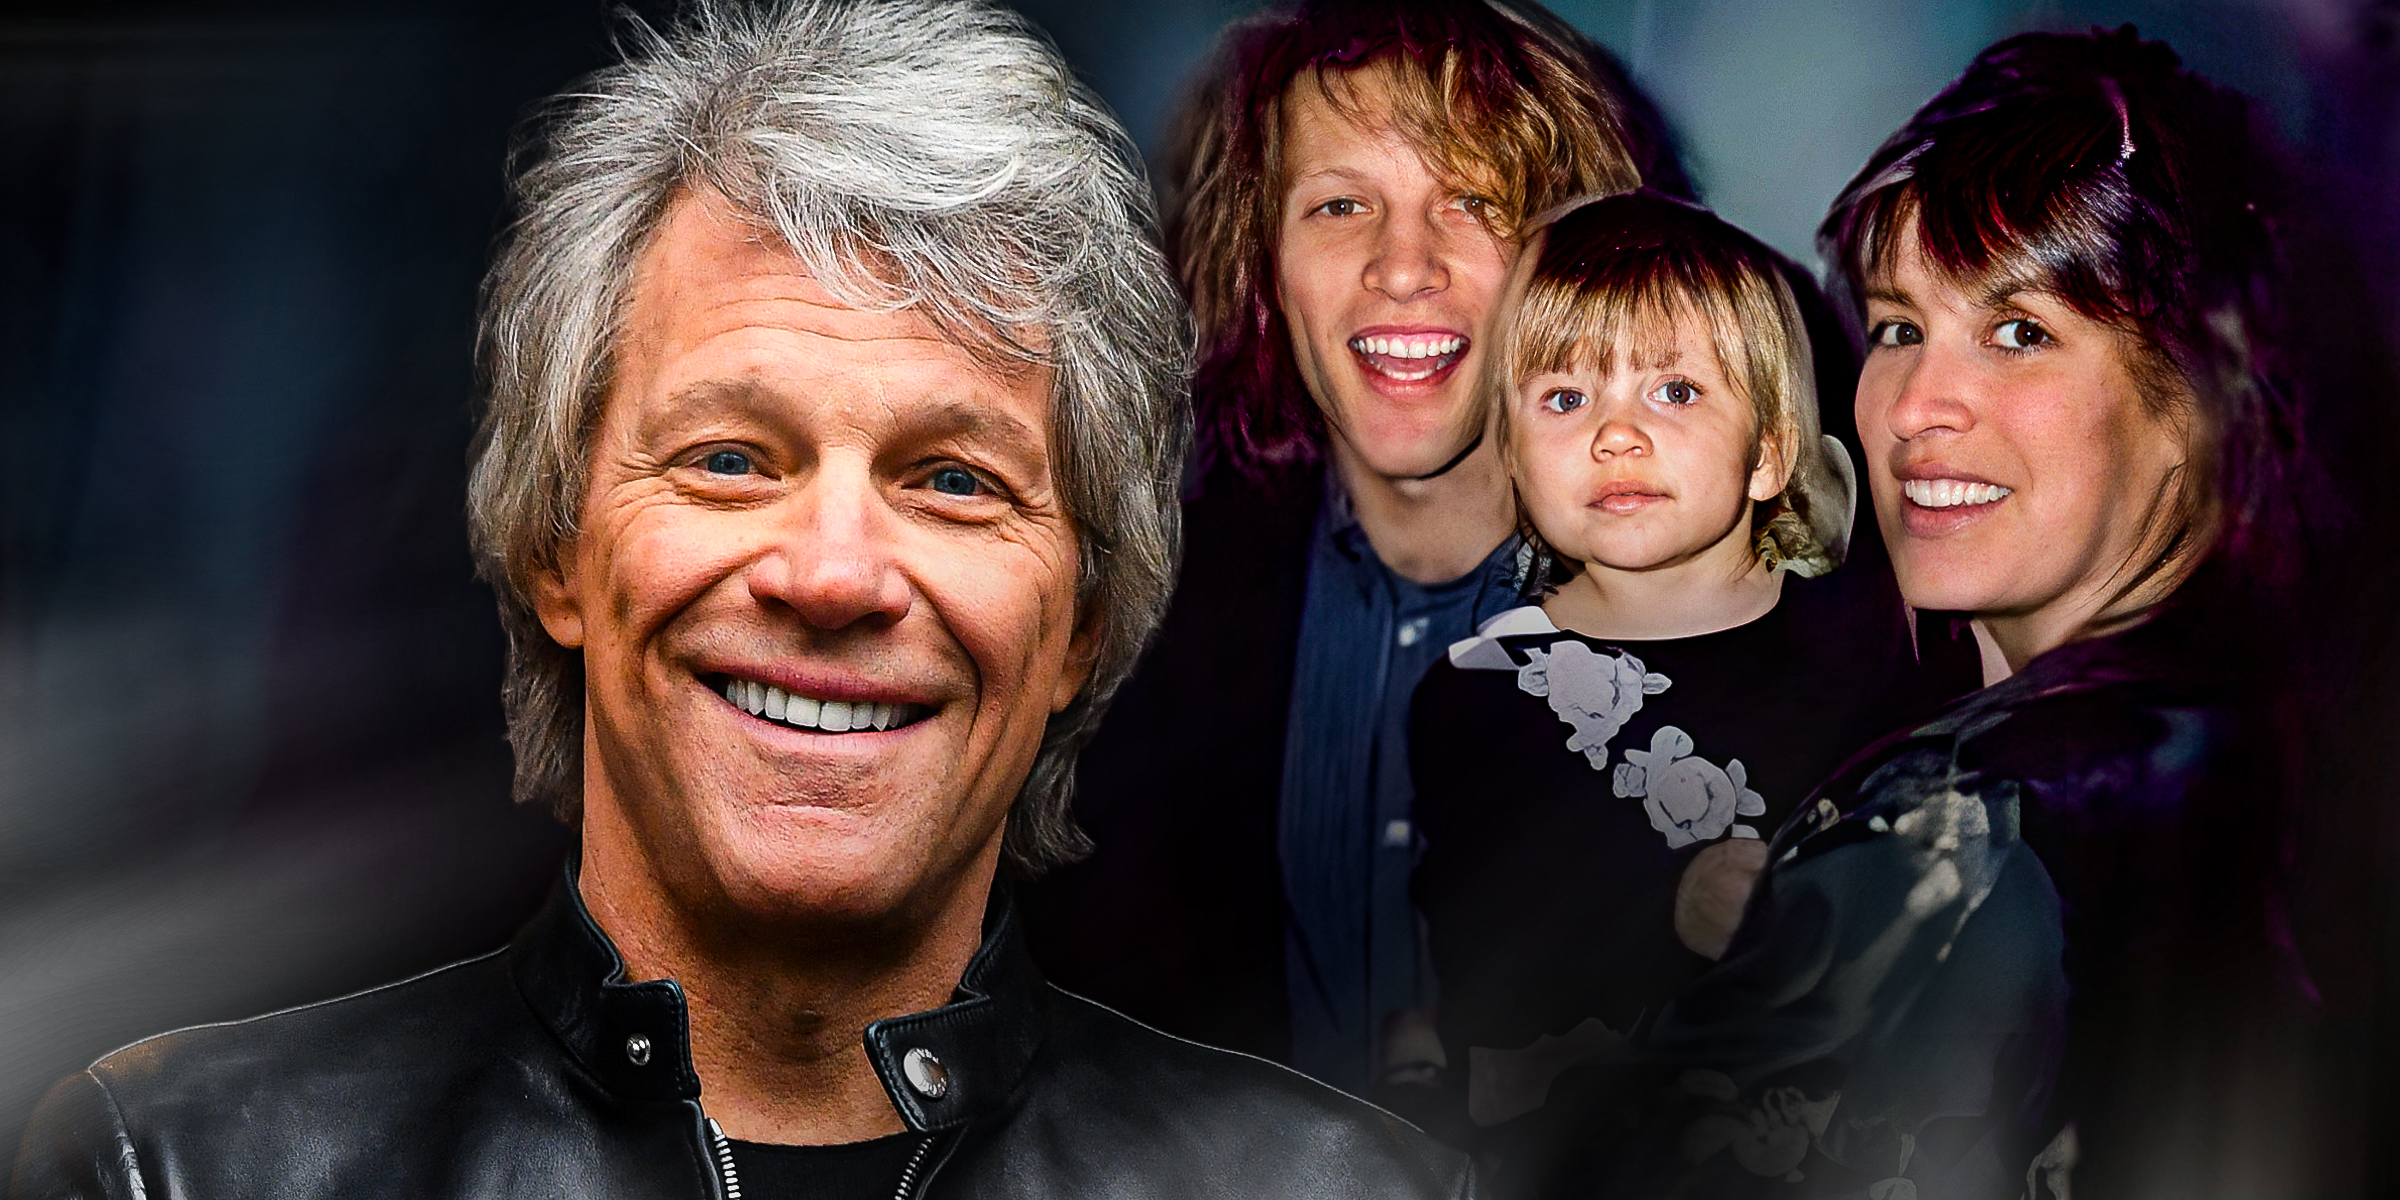 Jon Bon Jovi | Jon Bon Jovi, Stephanie Rose Bongiovi and Dorothea Hurley | Sources: Getty Images | Twitter/X/jonbonjovi